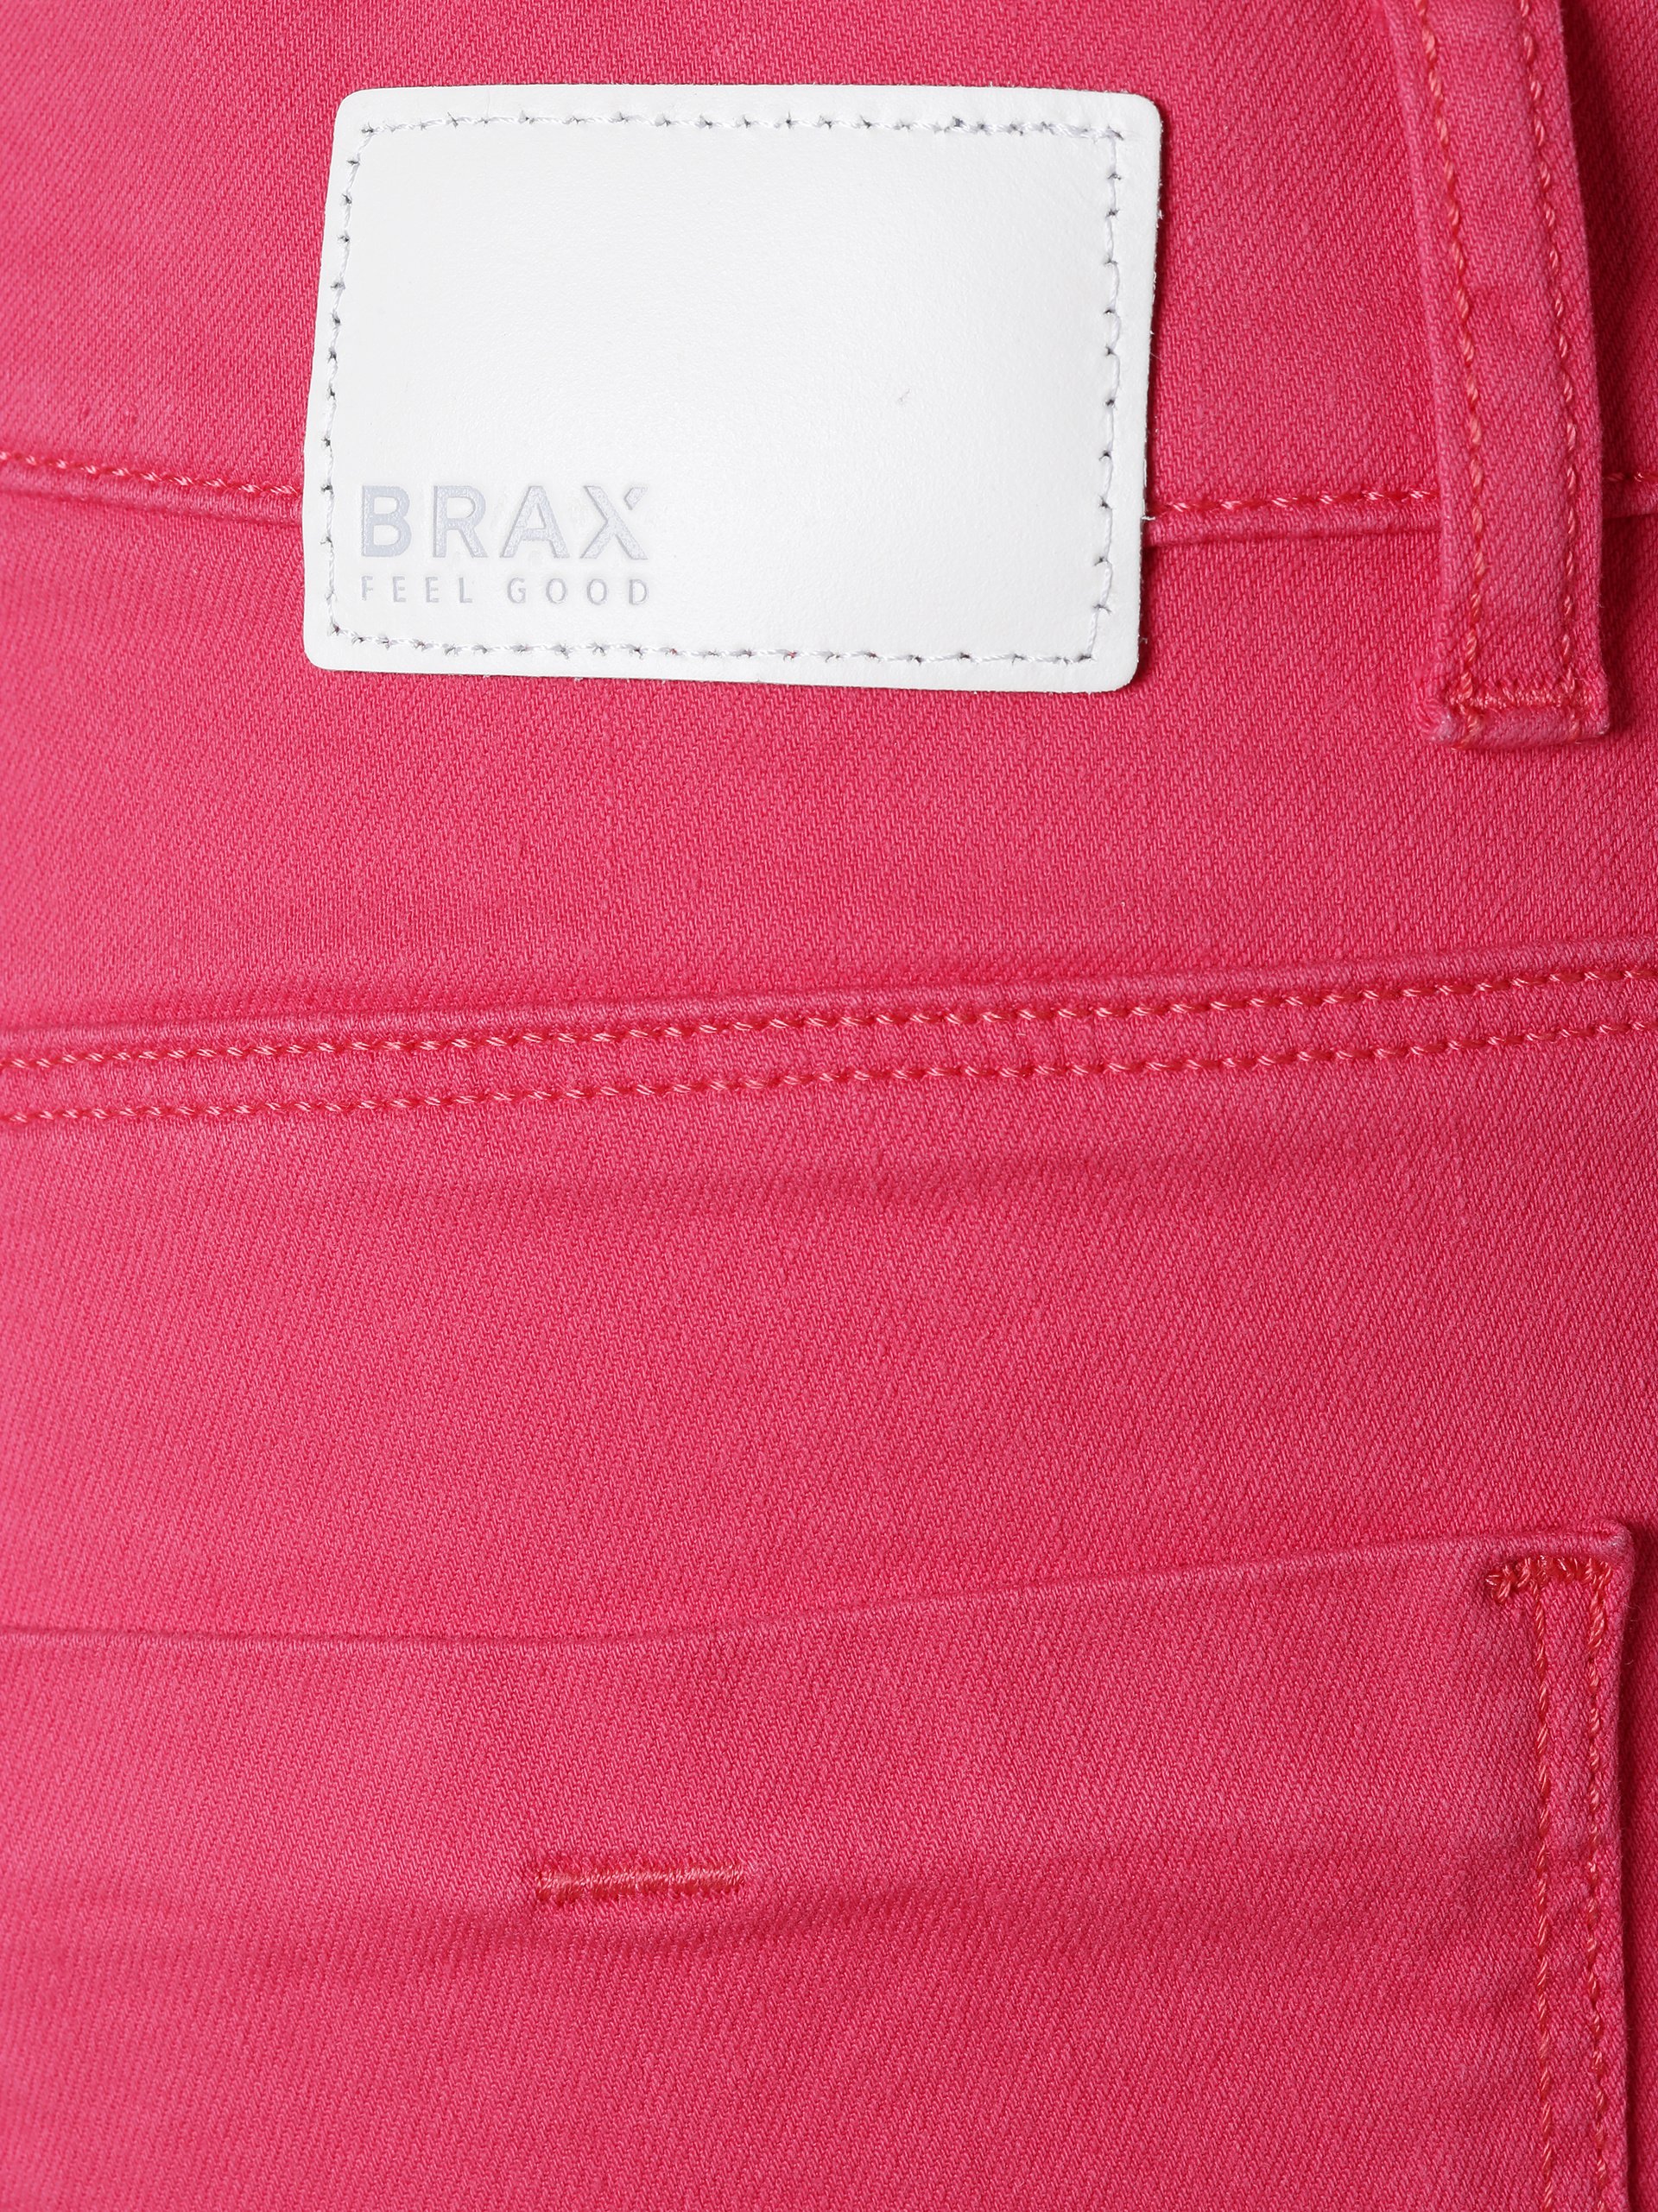 spier Toerist Respectvol BRAX Damen Jeans - Siri online kaufen | VANGRAAF.COM